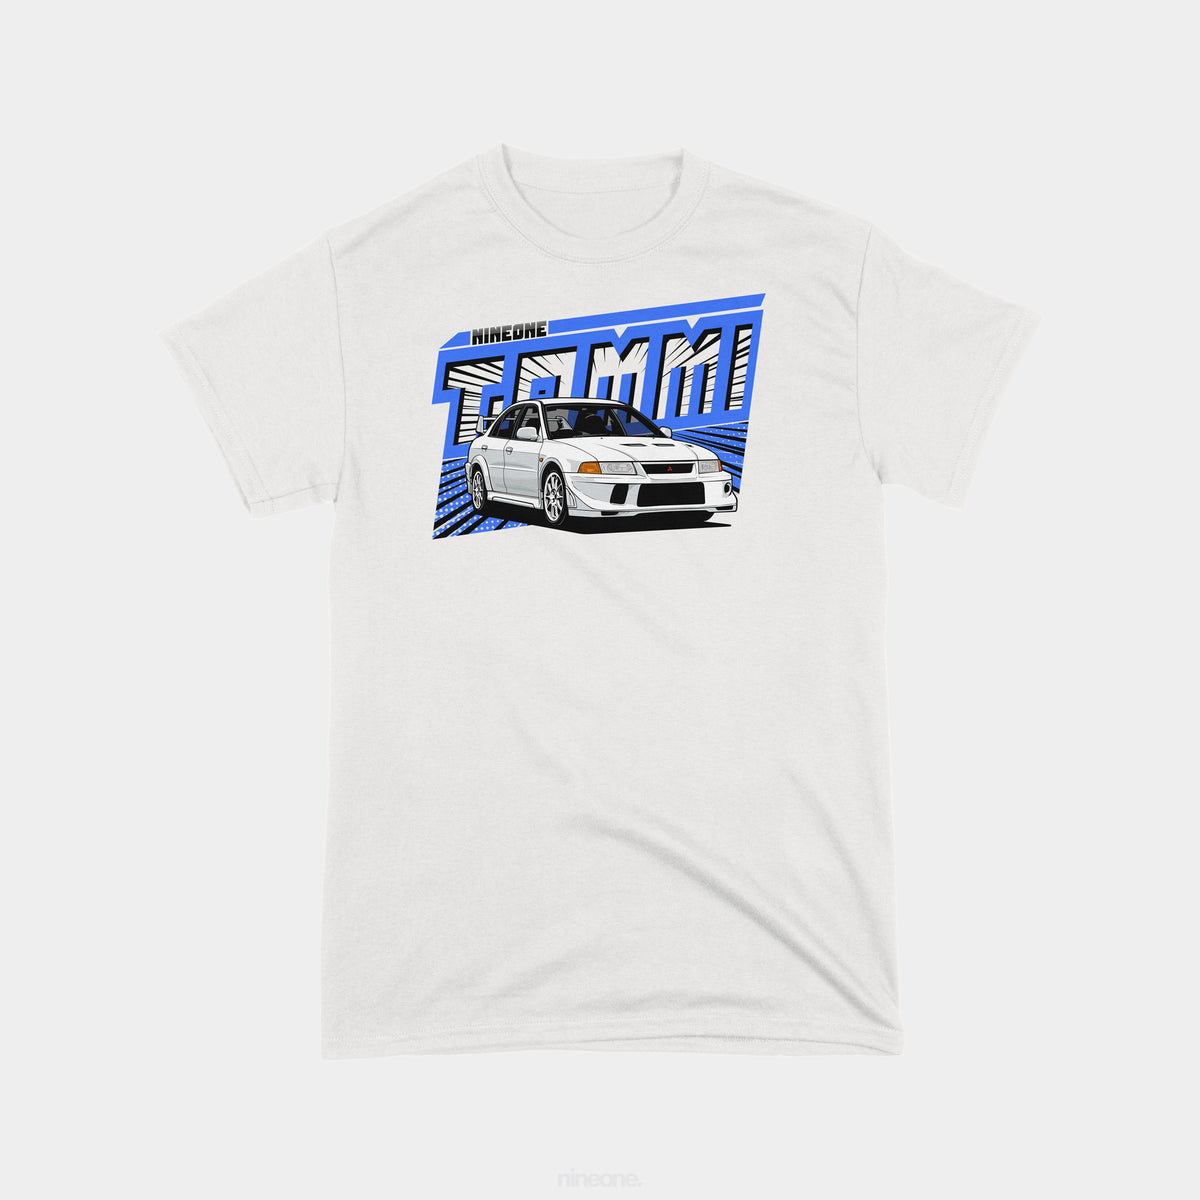 Tommi6 T-Shirt - nineone.